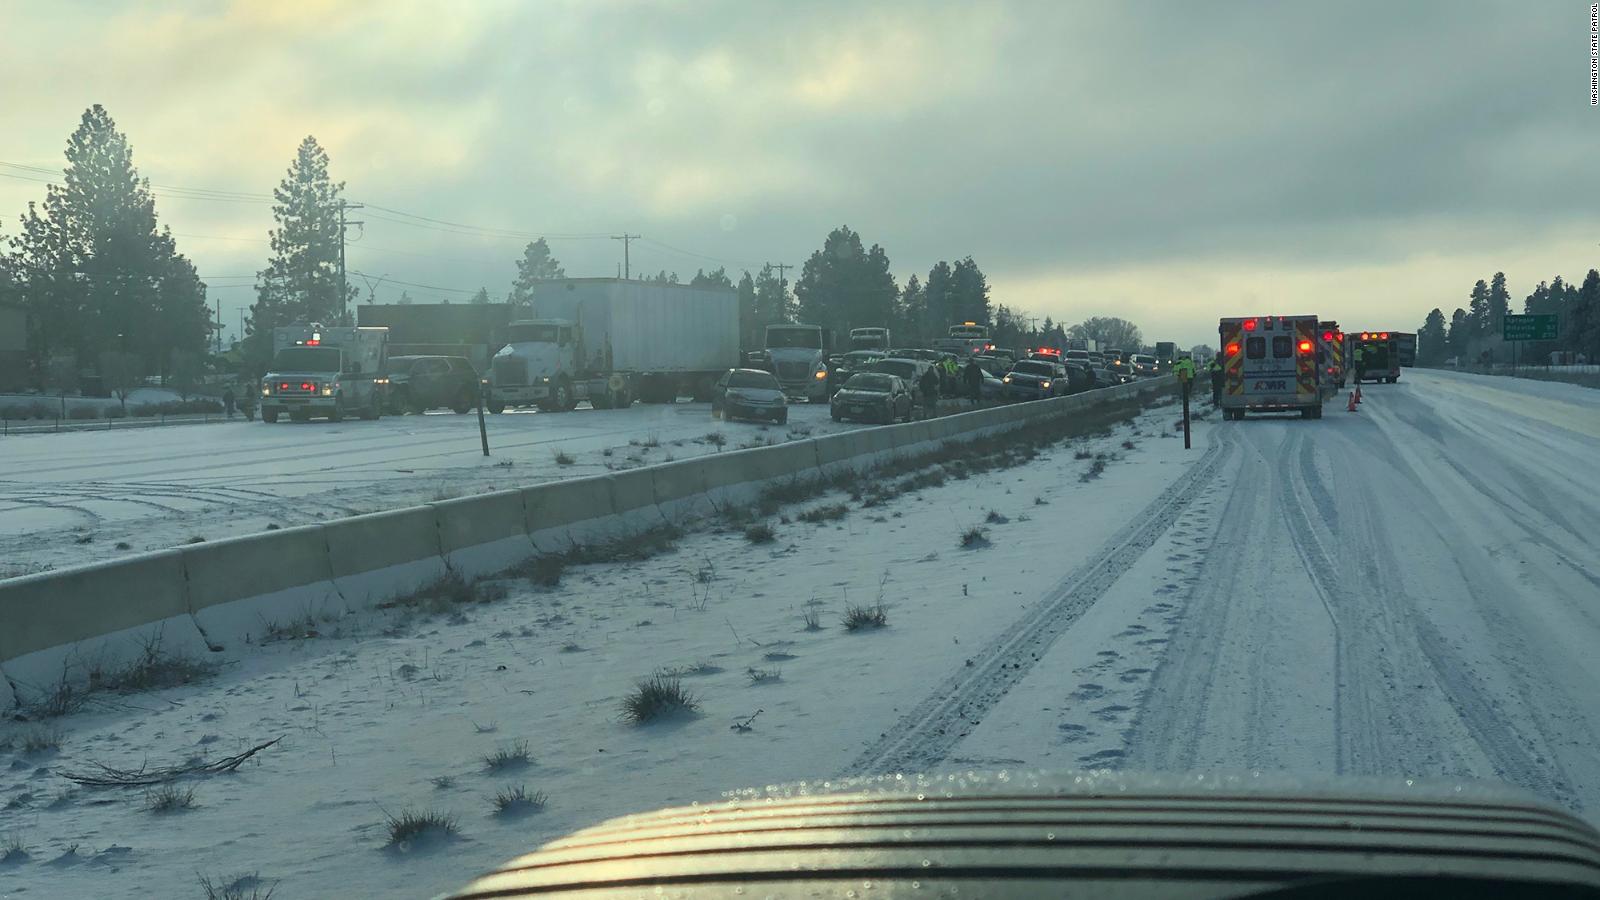 Over 60 cars pile up in Spokane crash after snowstorm CNN